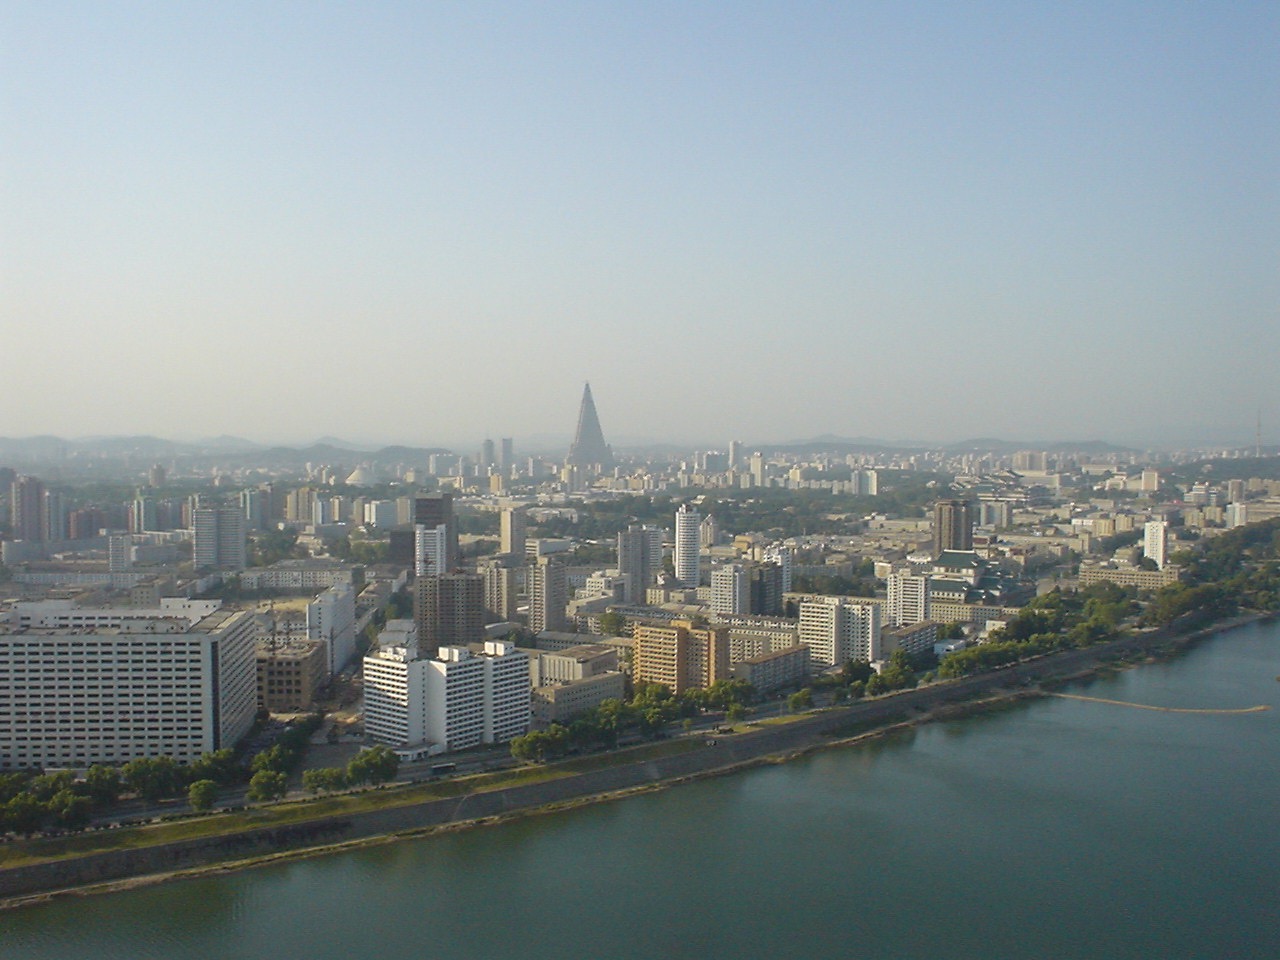 The City of Pyongyang